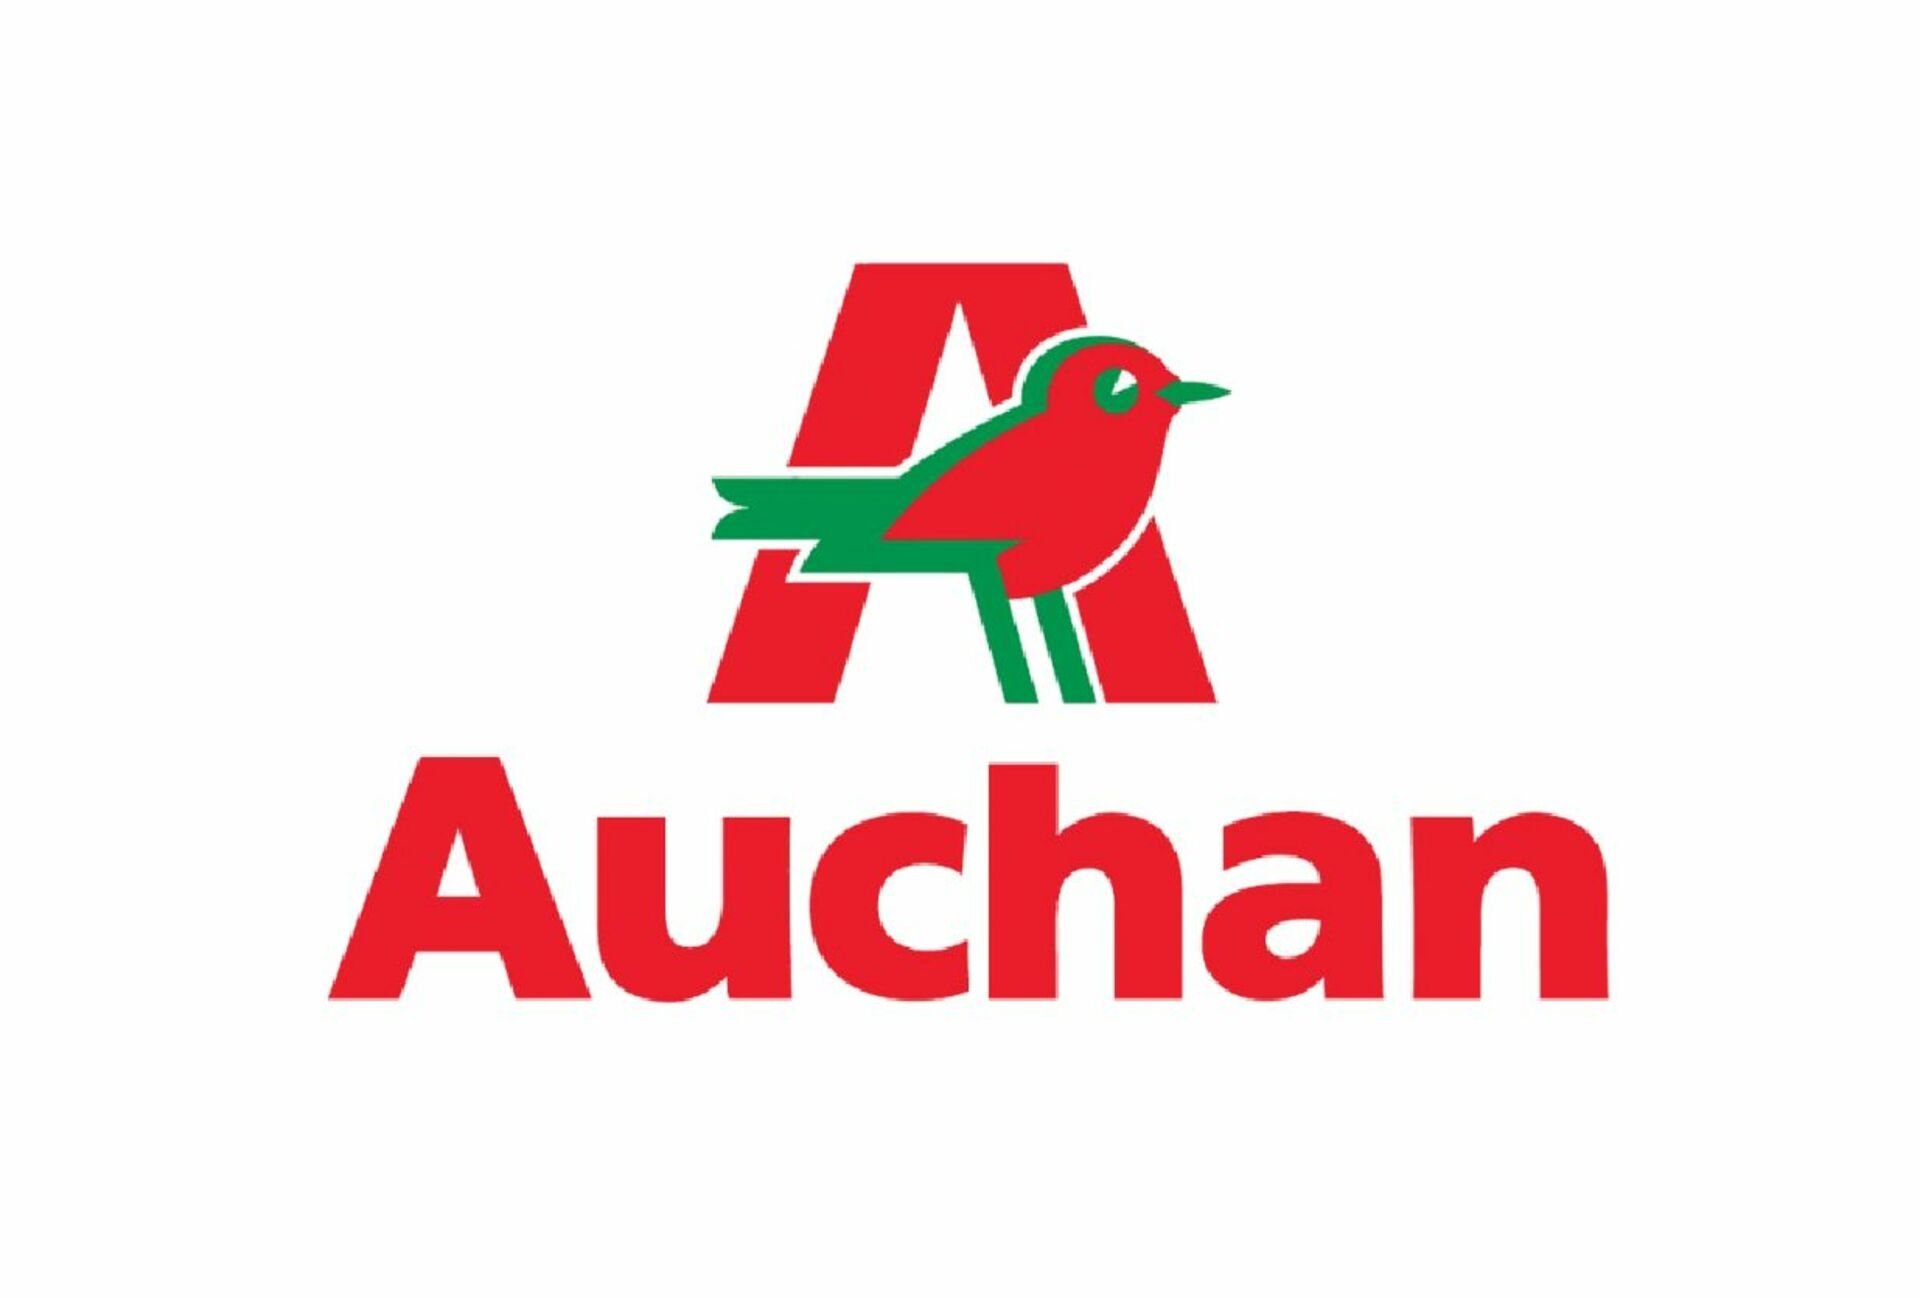 Auchan компании франции. Ашан магазин логотип. Ашан логотип на прозрачном фоне. Акшан. Значок магазина Ашан.